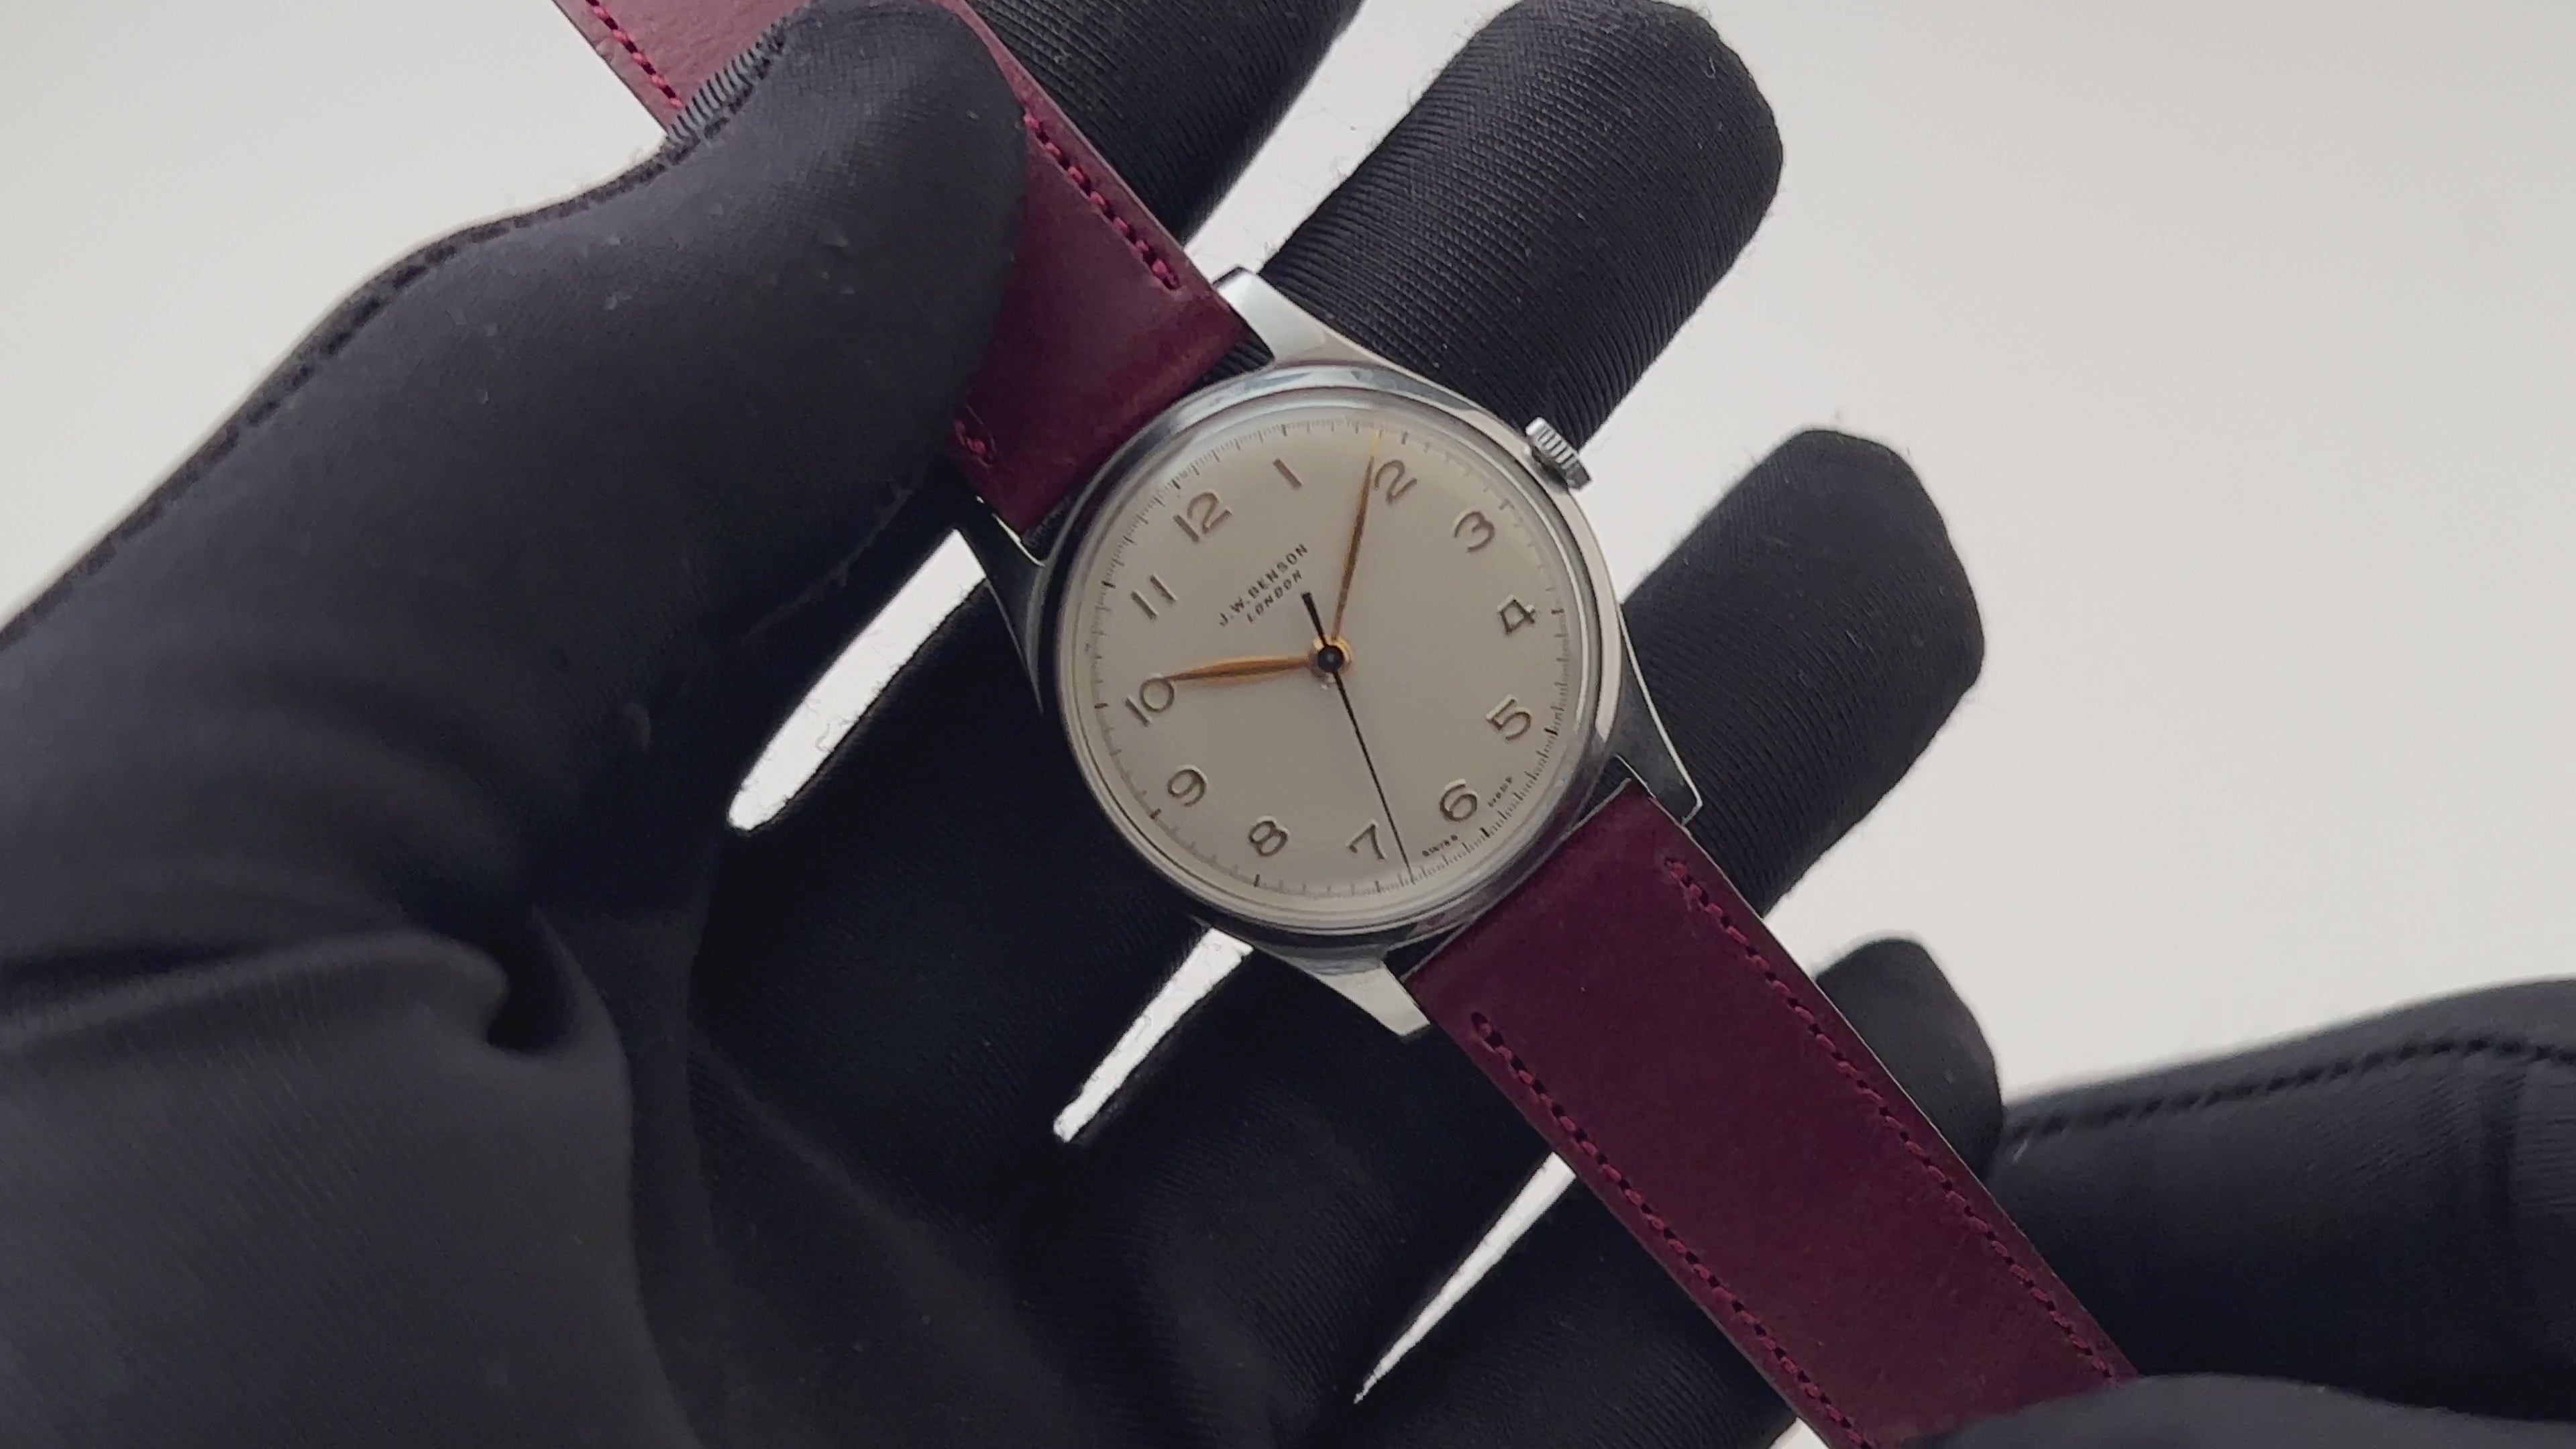 50s1950s-1960s J.W.BENSON ベンソン 腕時計 イギリス製